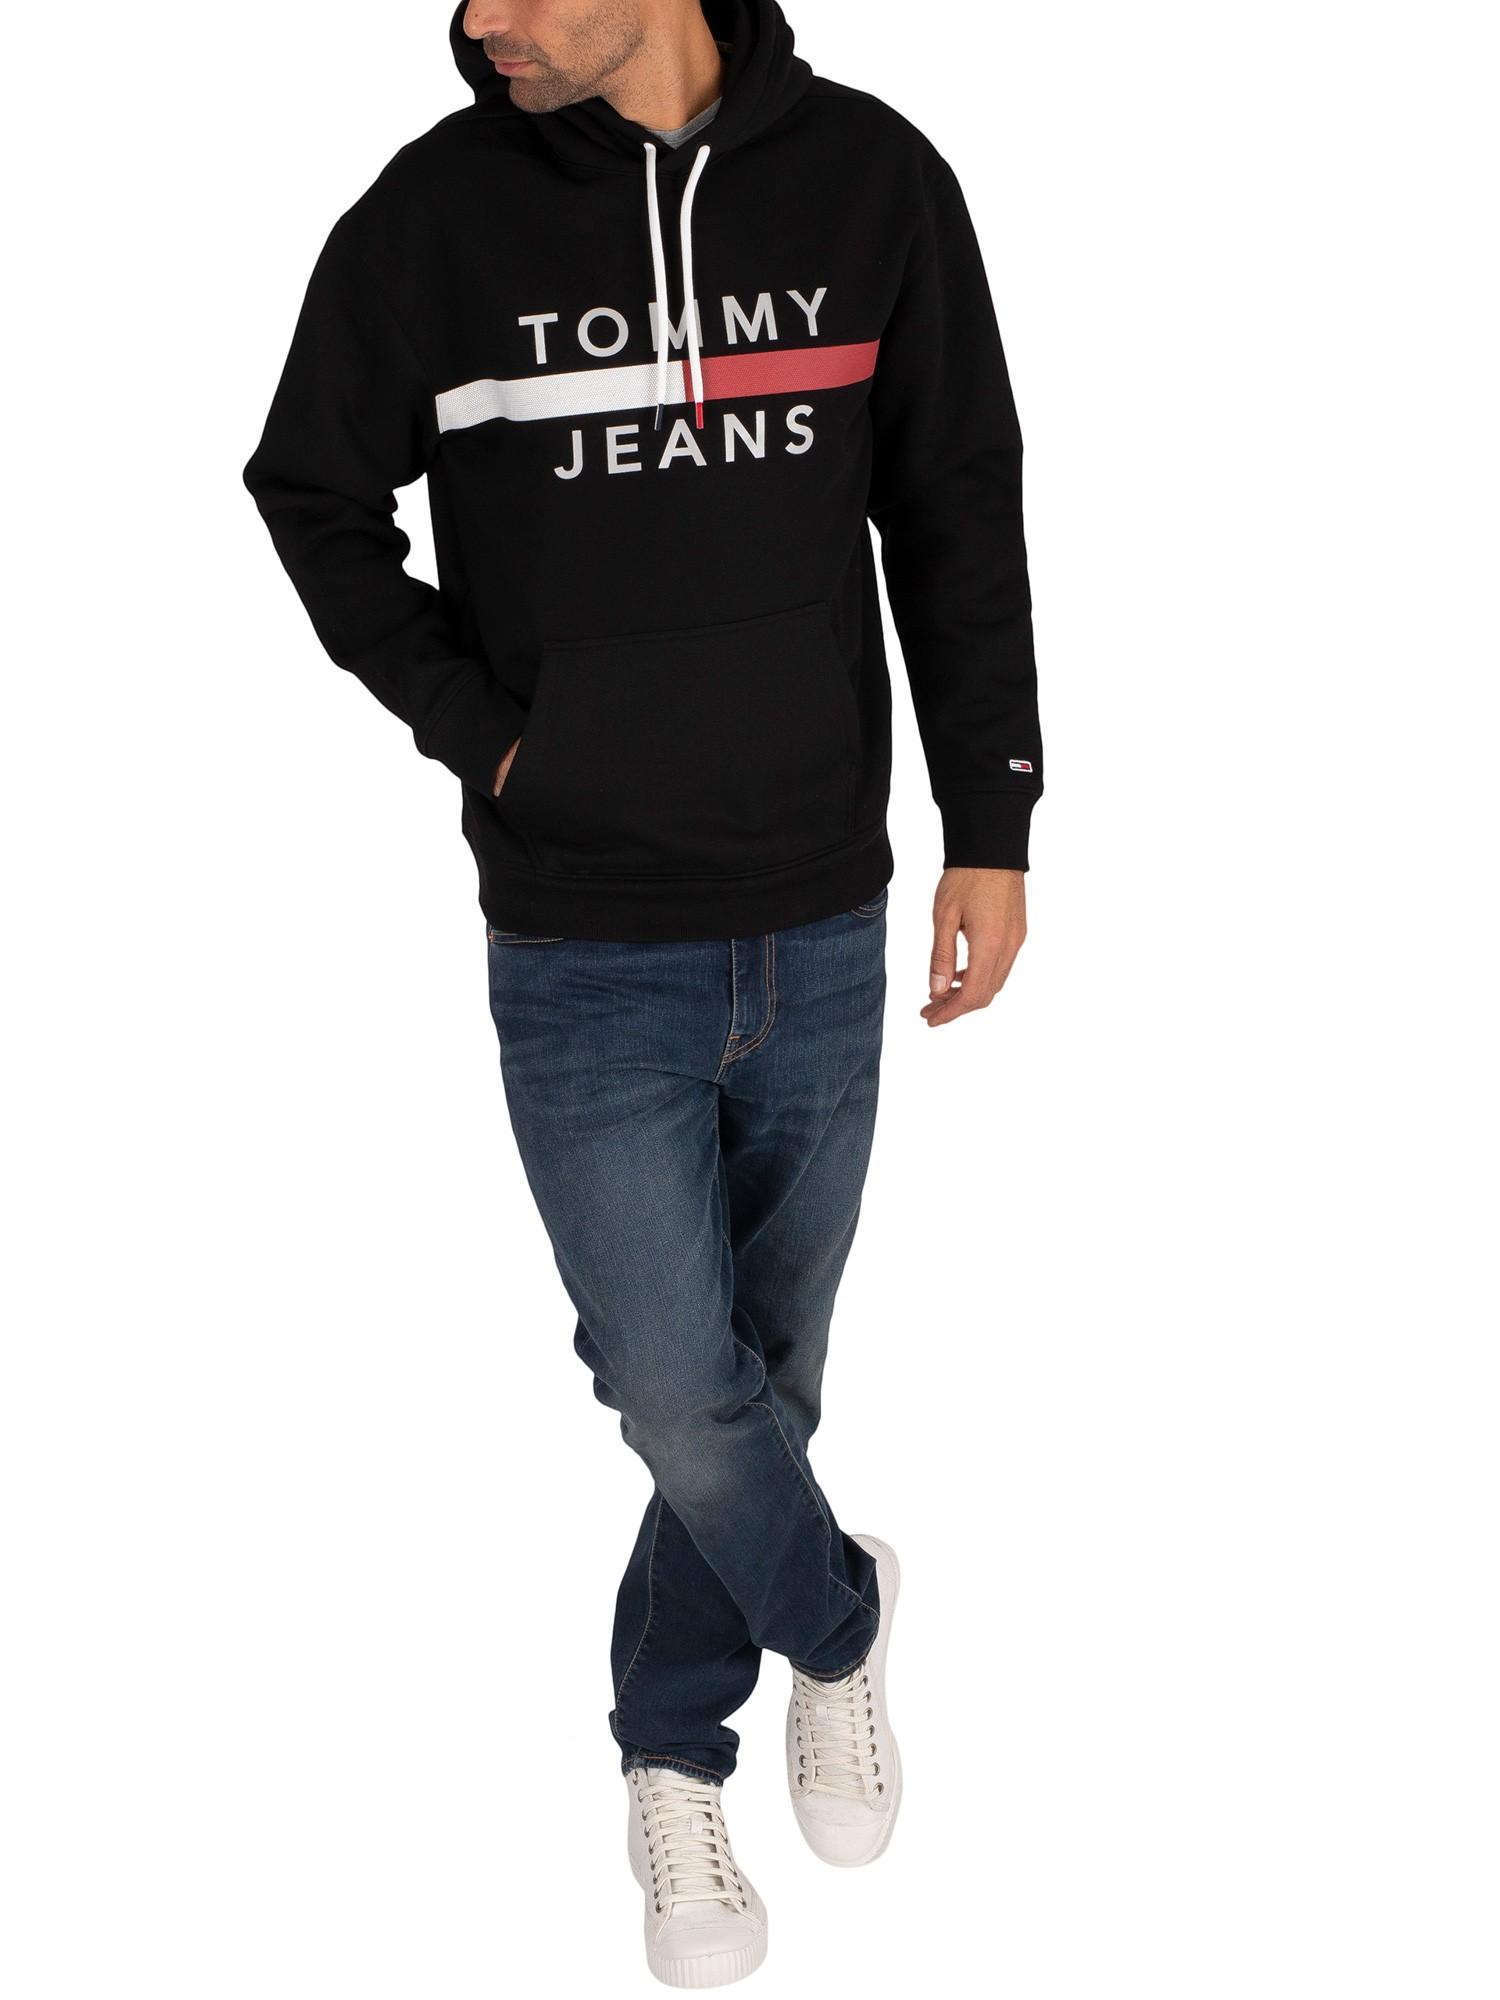 Tommy Hilfiger Denim Tommy Jeans Reflective Flag Hoody in Black 